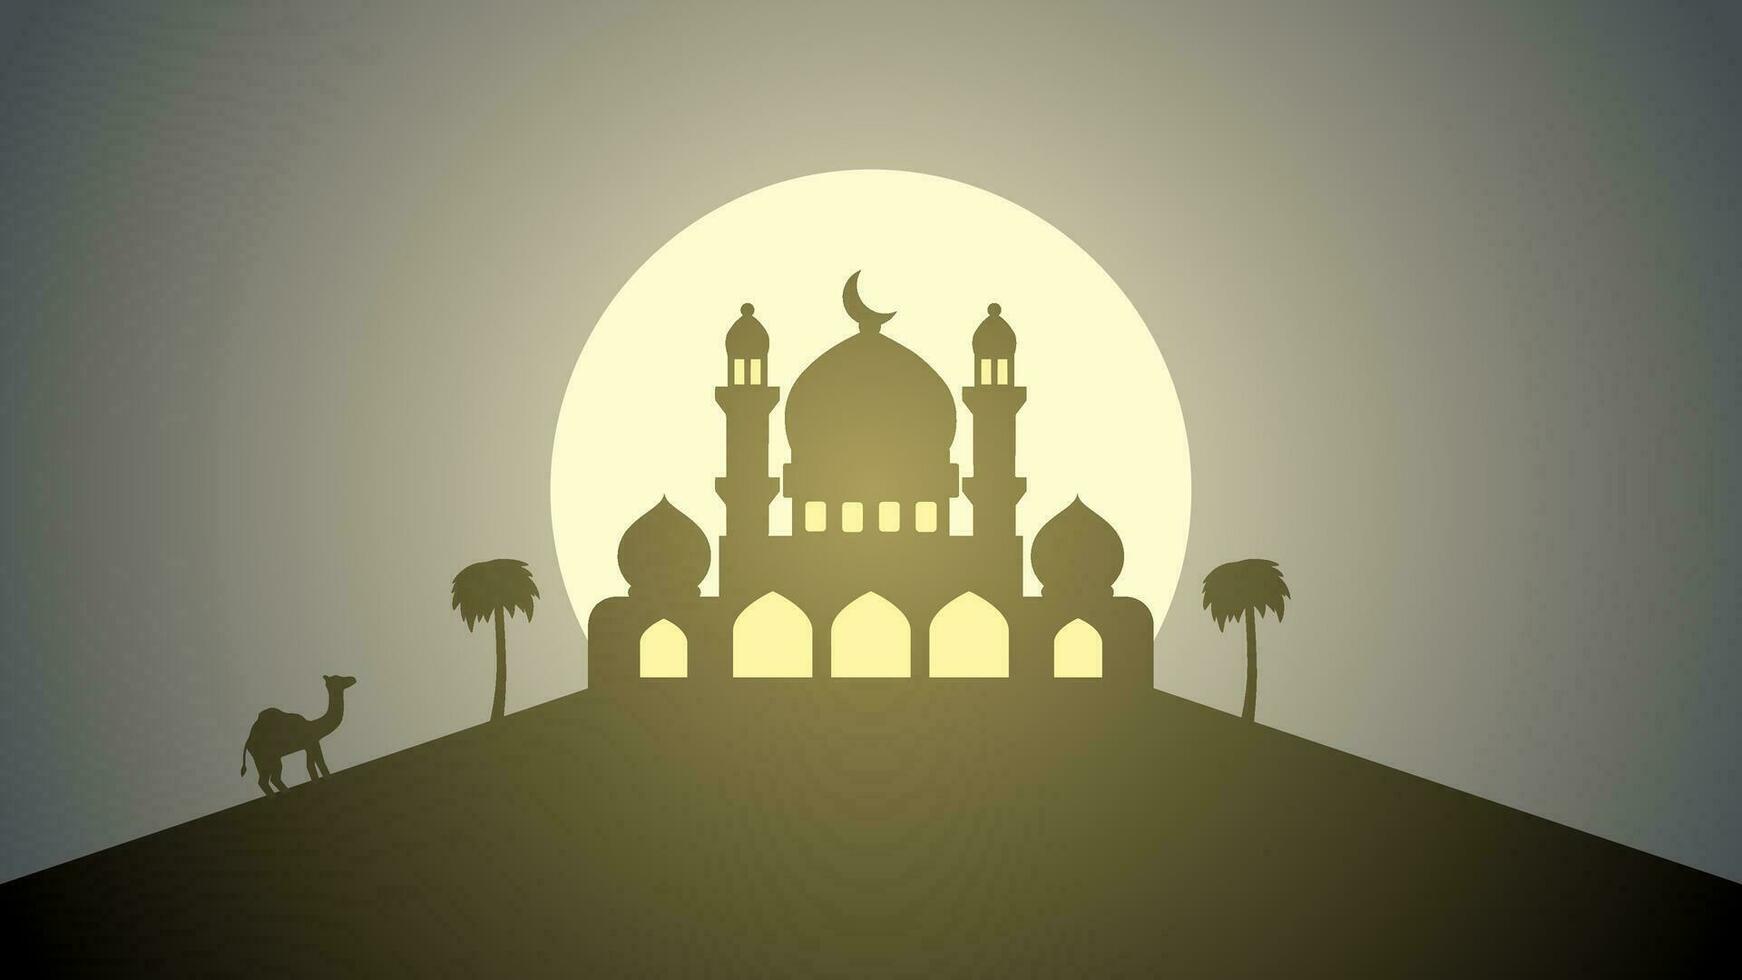 mezquita silueta paisaje vector ilustración. Ramadán paisaje diseño gráfico en musulmán cultura y islam religión. mezquita panorama para ilustración, antecedentes o fondo de pantalla